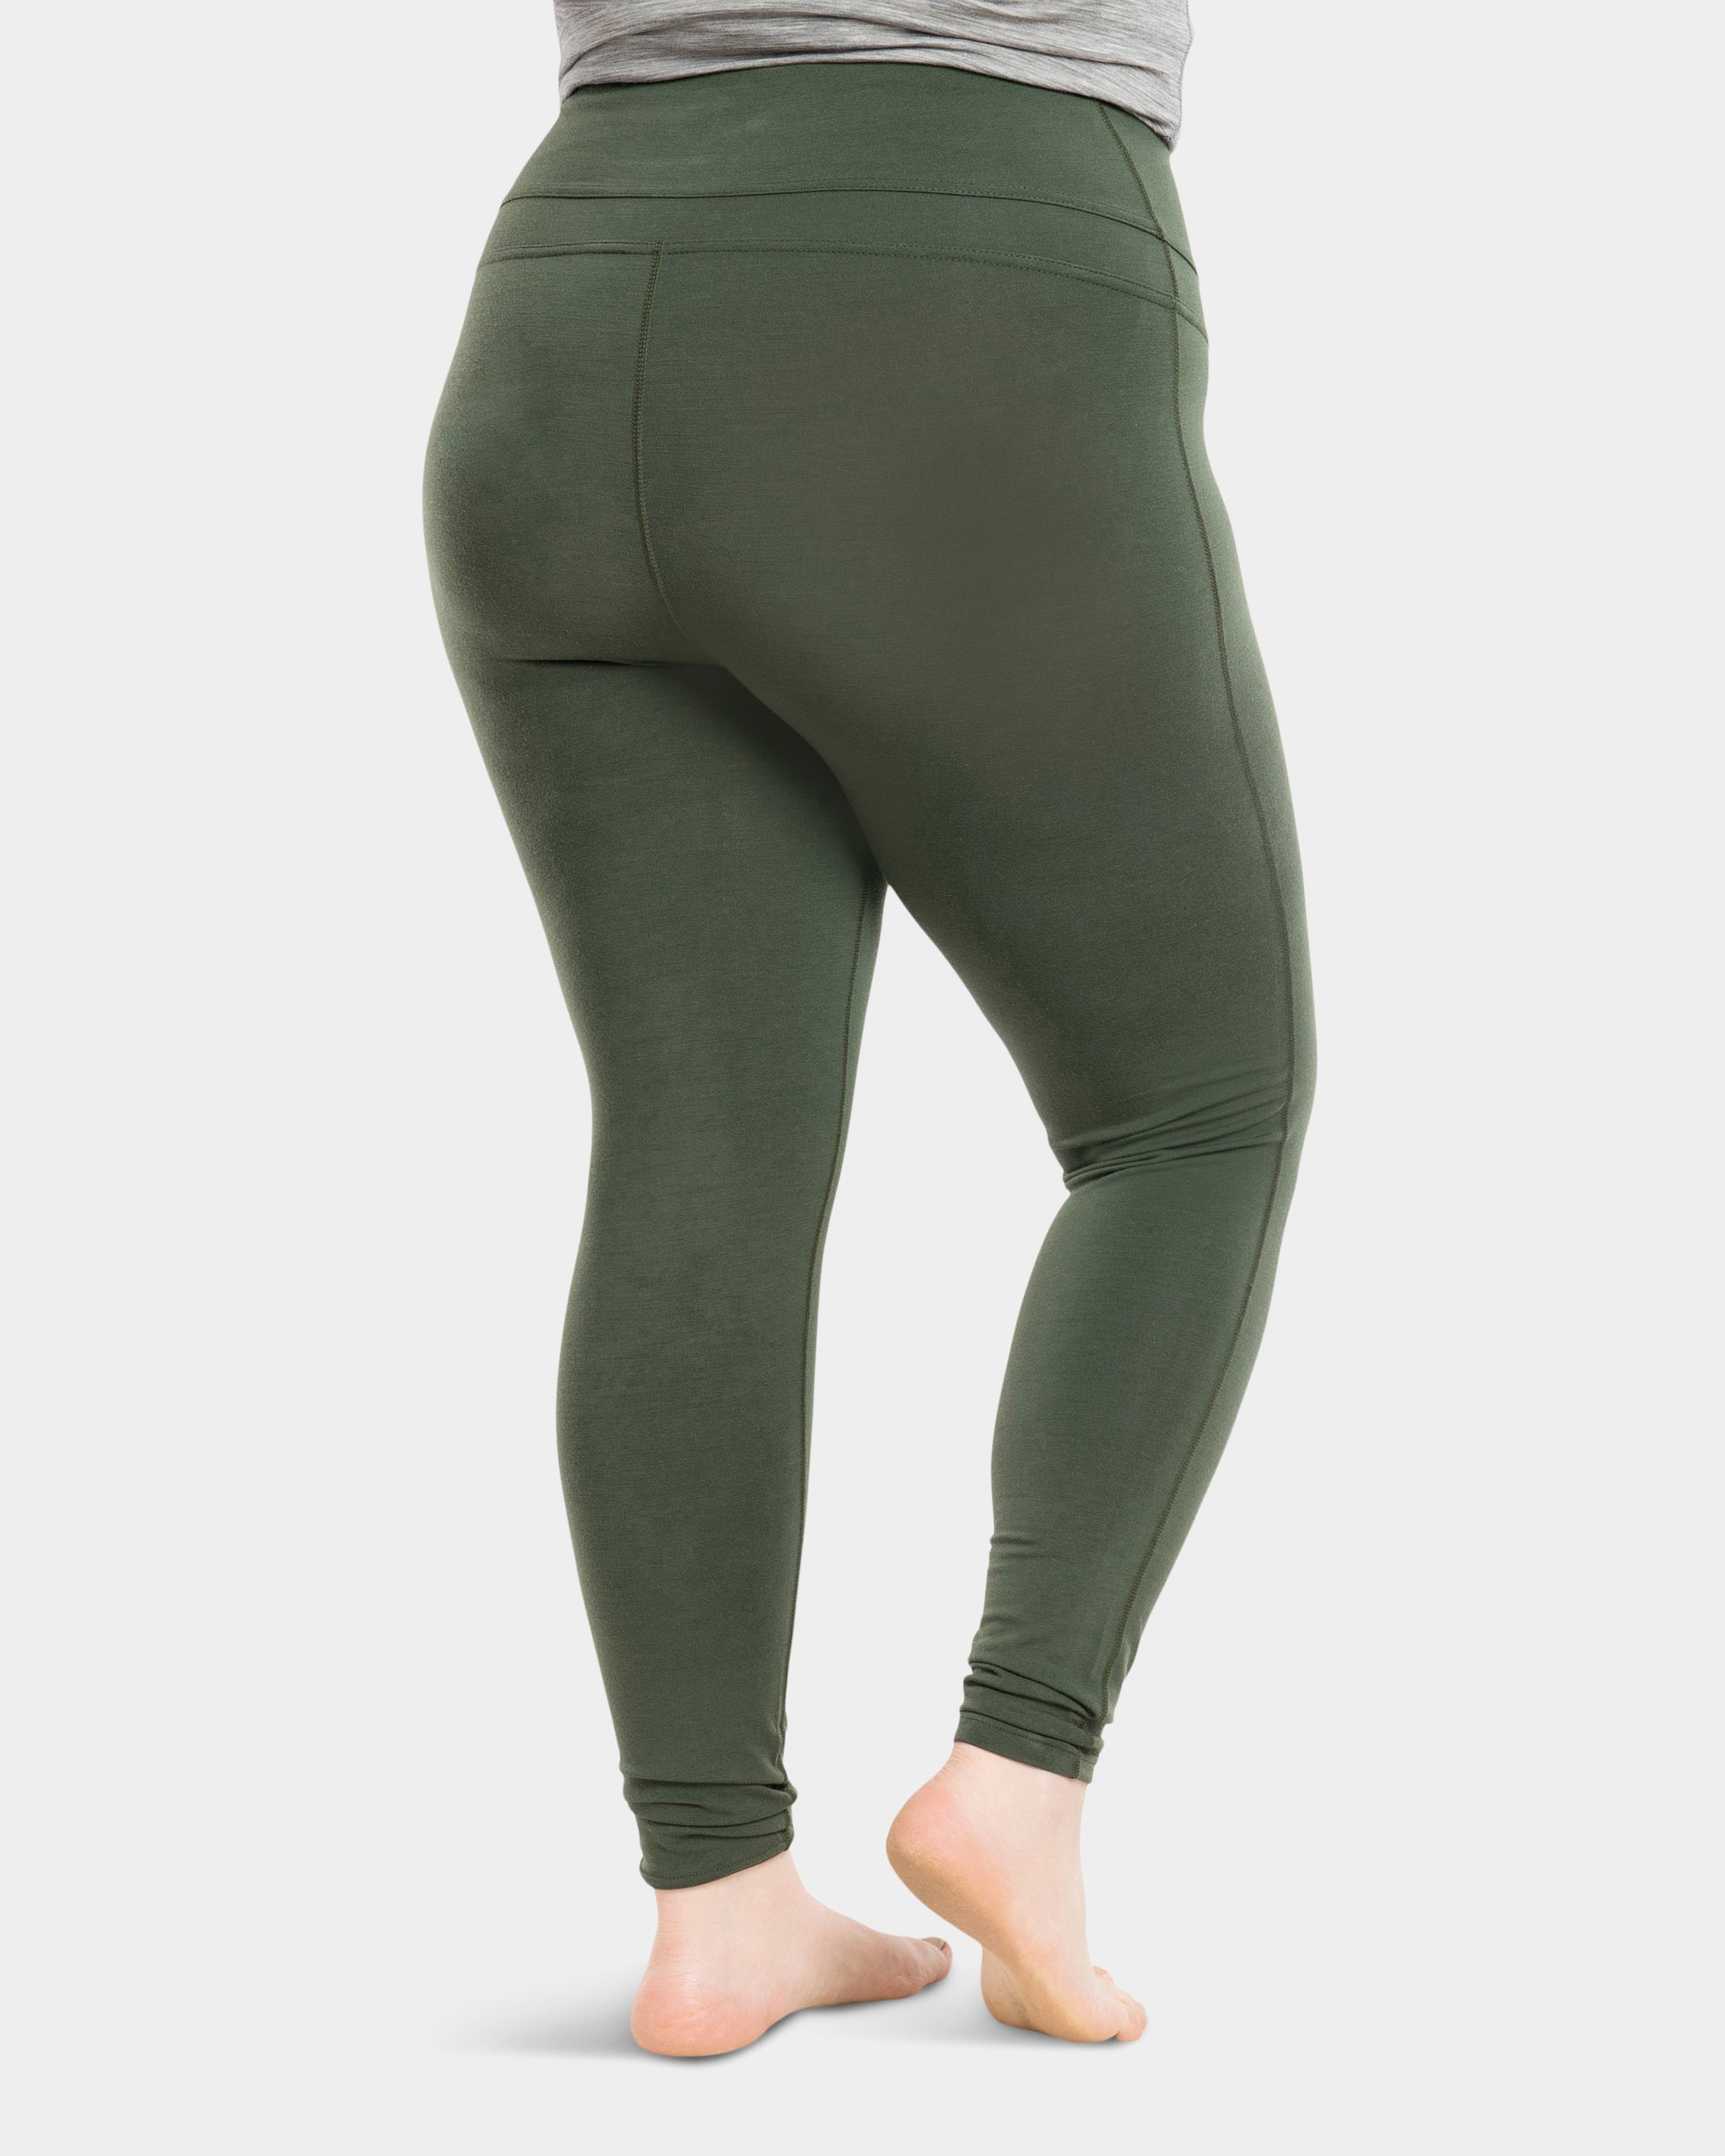 Women's Flex High-Rise 7/8 Leggings - All in Motion Olive Green Large Short  NWT